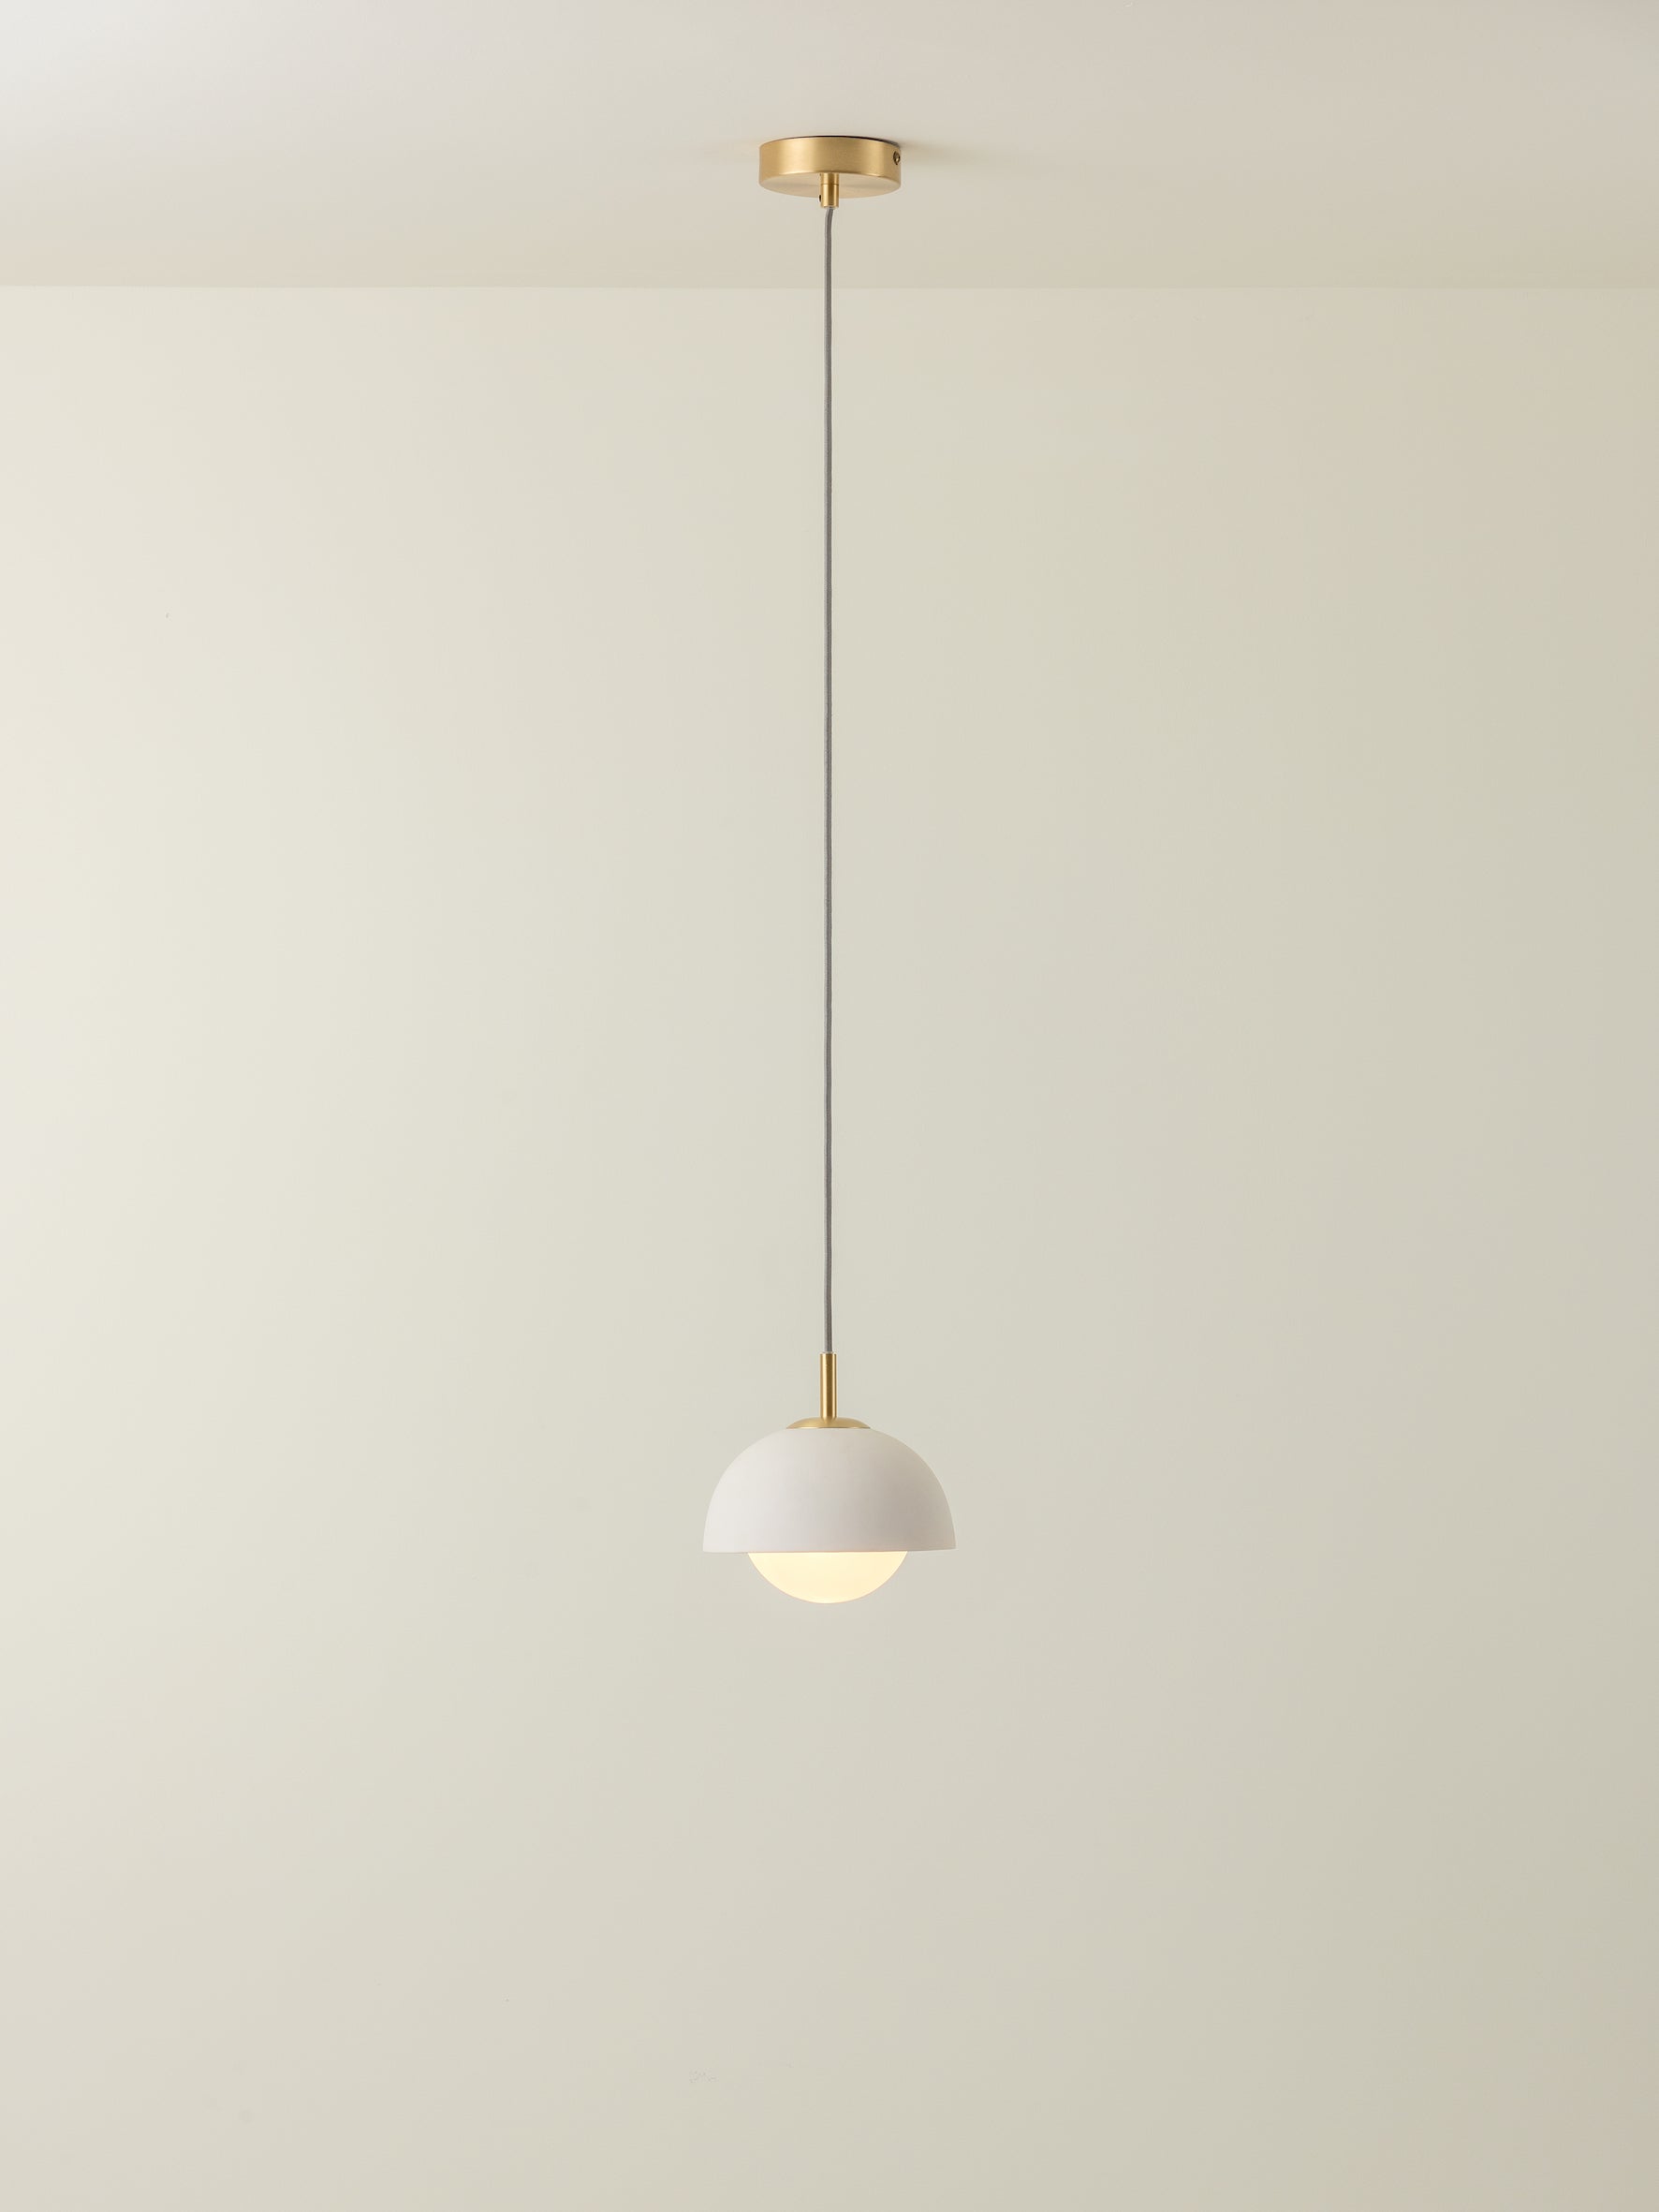 Porsa - 1 light brushed brass and warm white porcelain pendant | Ceiling Light | Lights & Lamps Inc | Modern Affordable Designer Lighting | USA